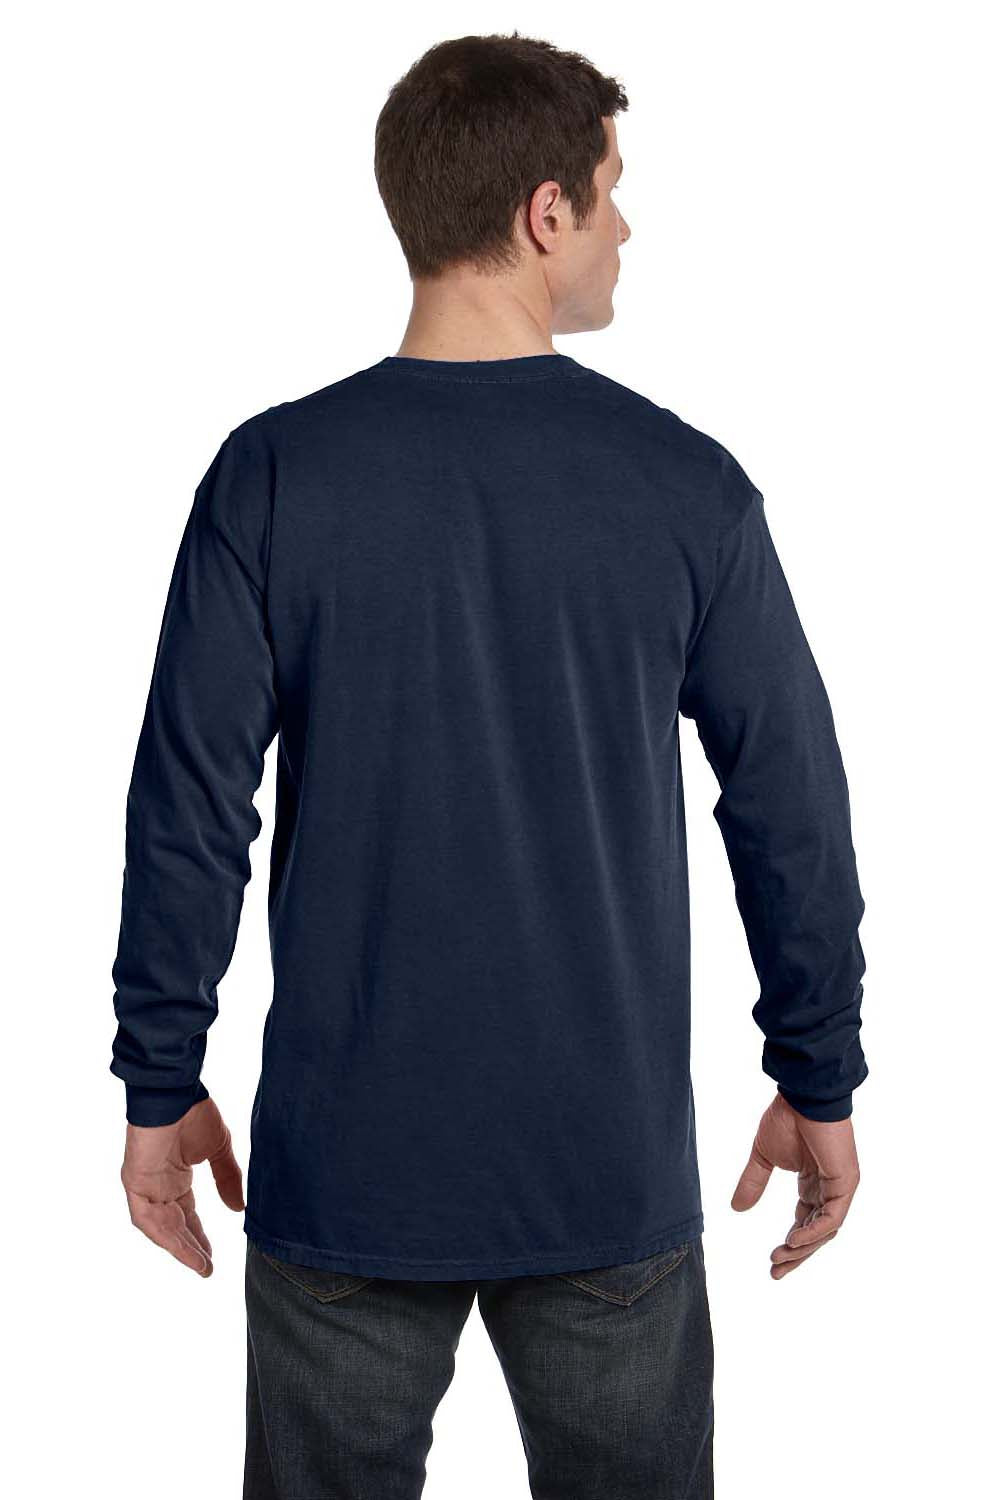 Comfort Colors C6014 Mens Long Sleeve Crewneck T-Shirt Navy Blue Back